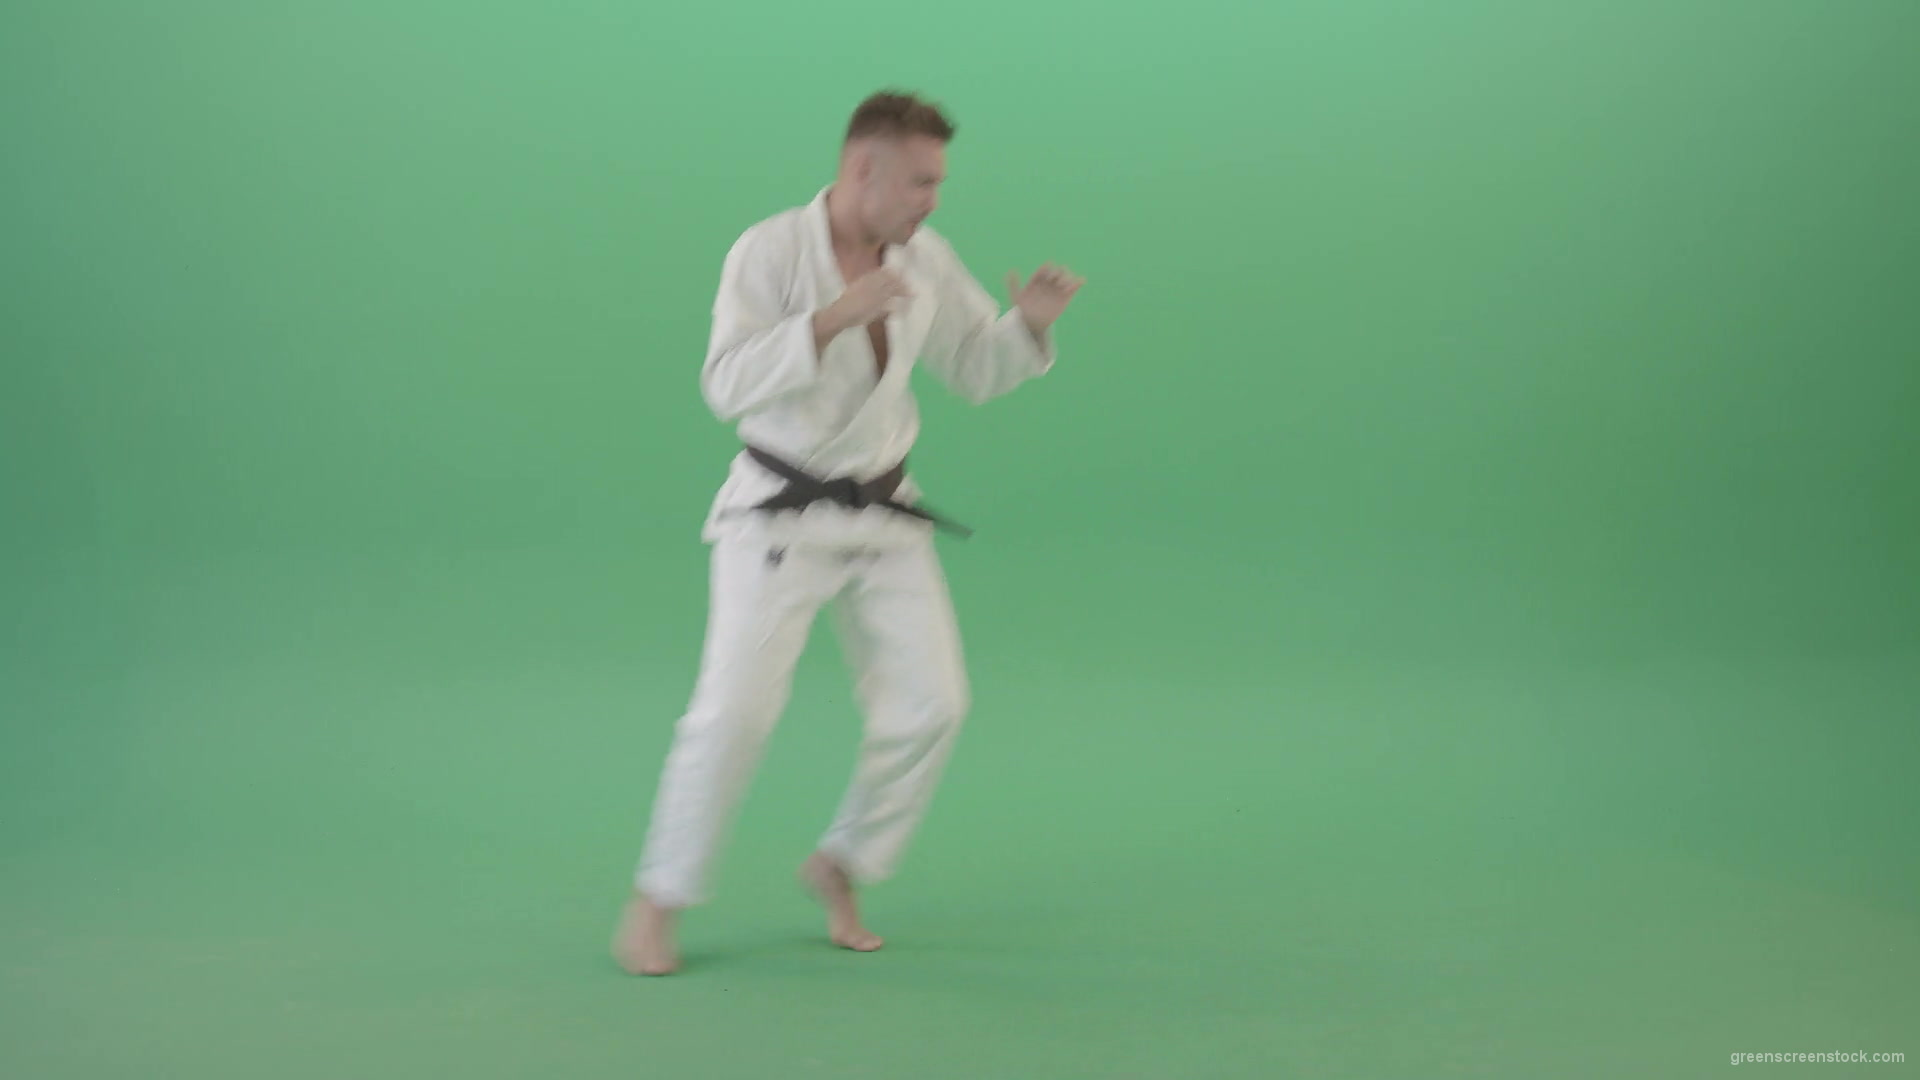 Jujutsu-Man-trianing-to-fight-combat-isolated-on-green-screen-1920_004 Green Screen Stock